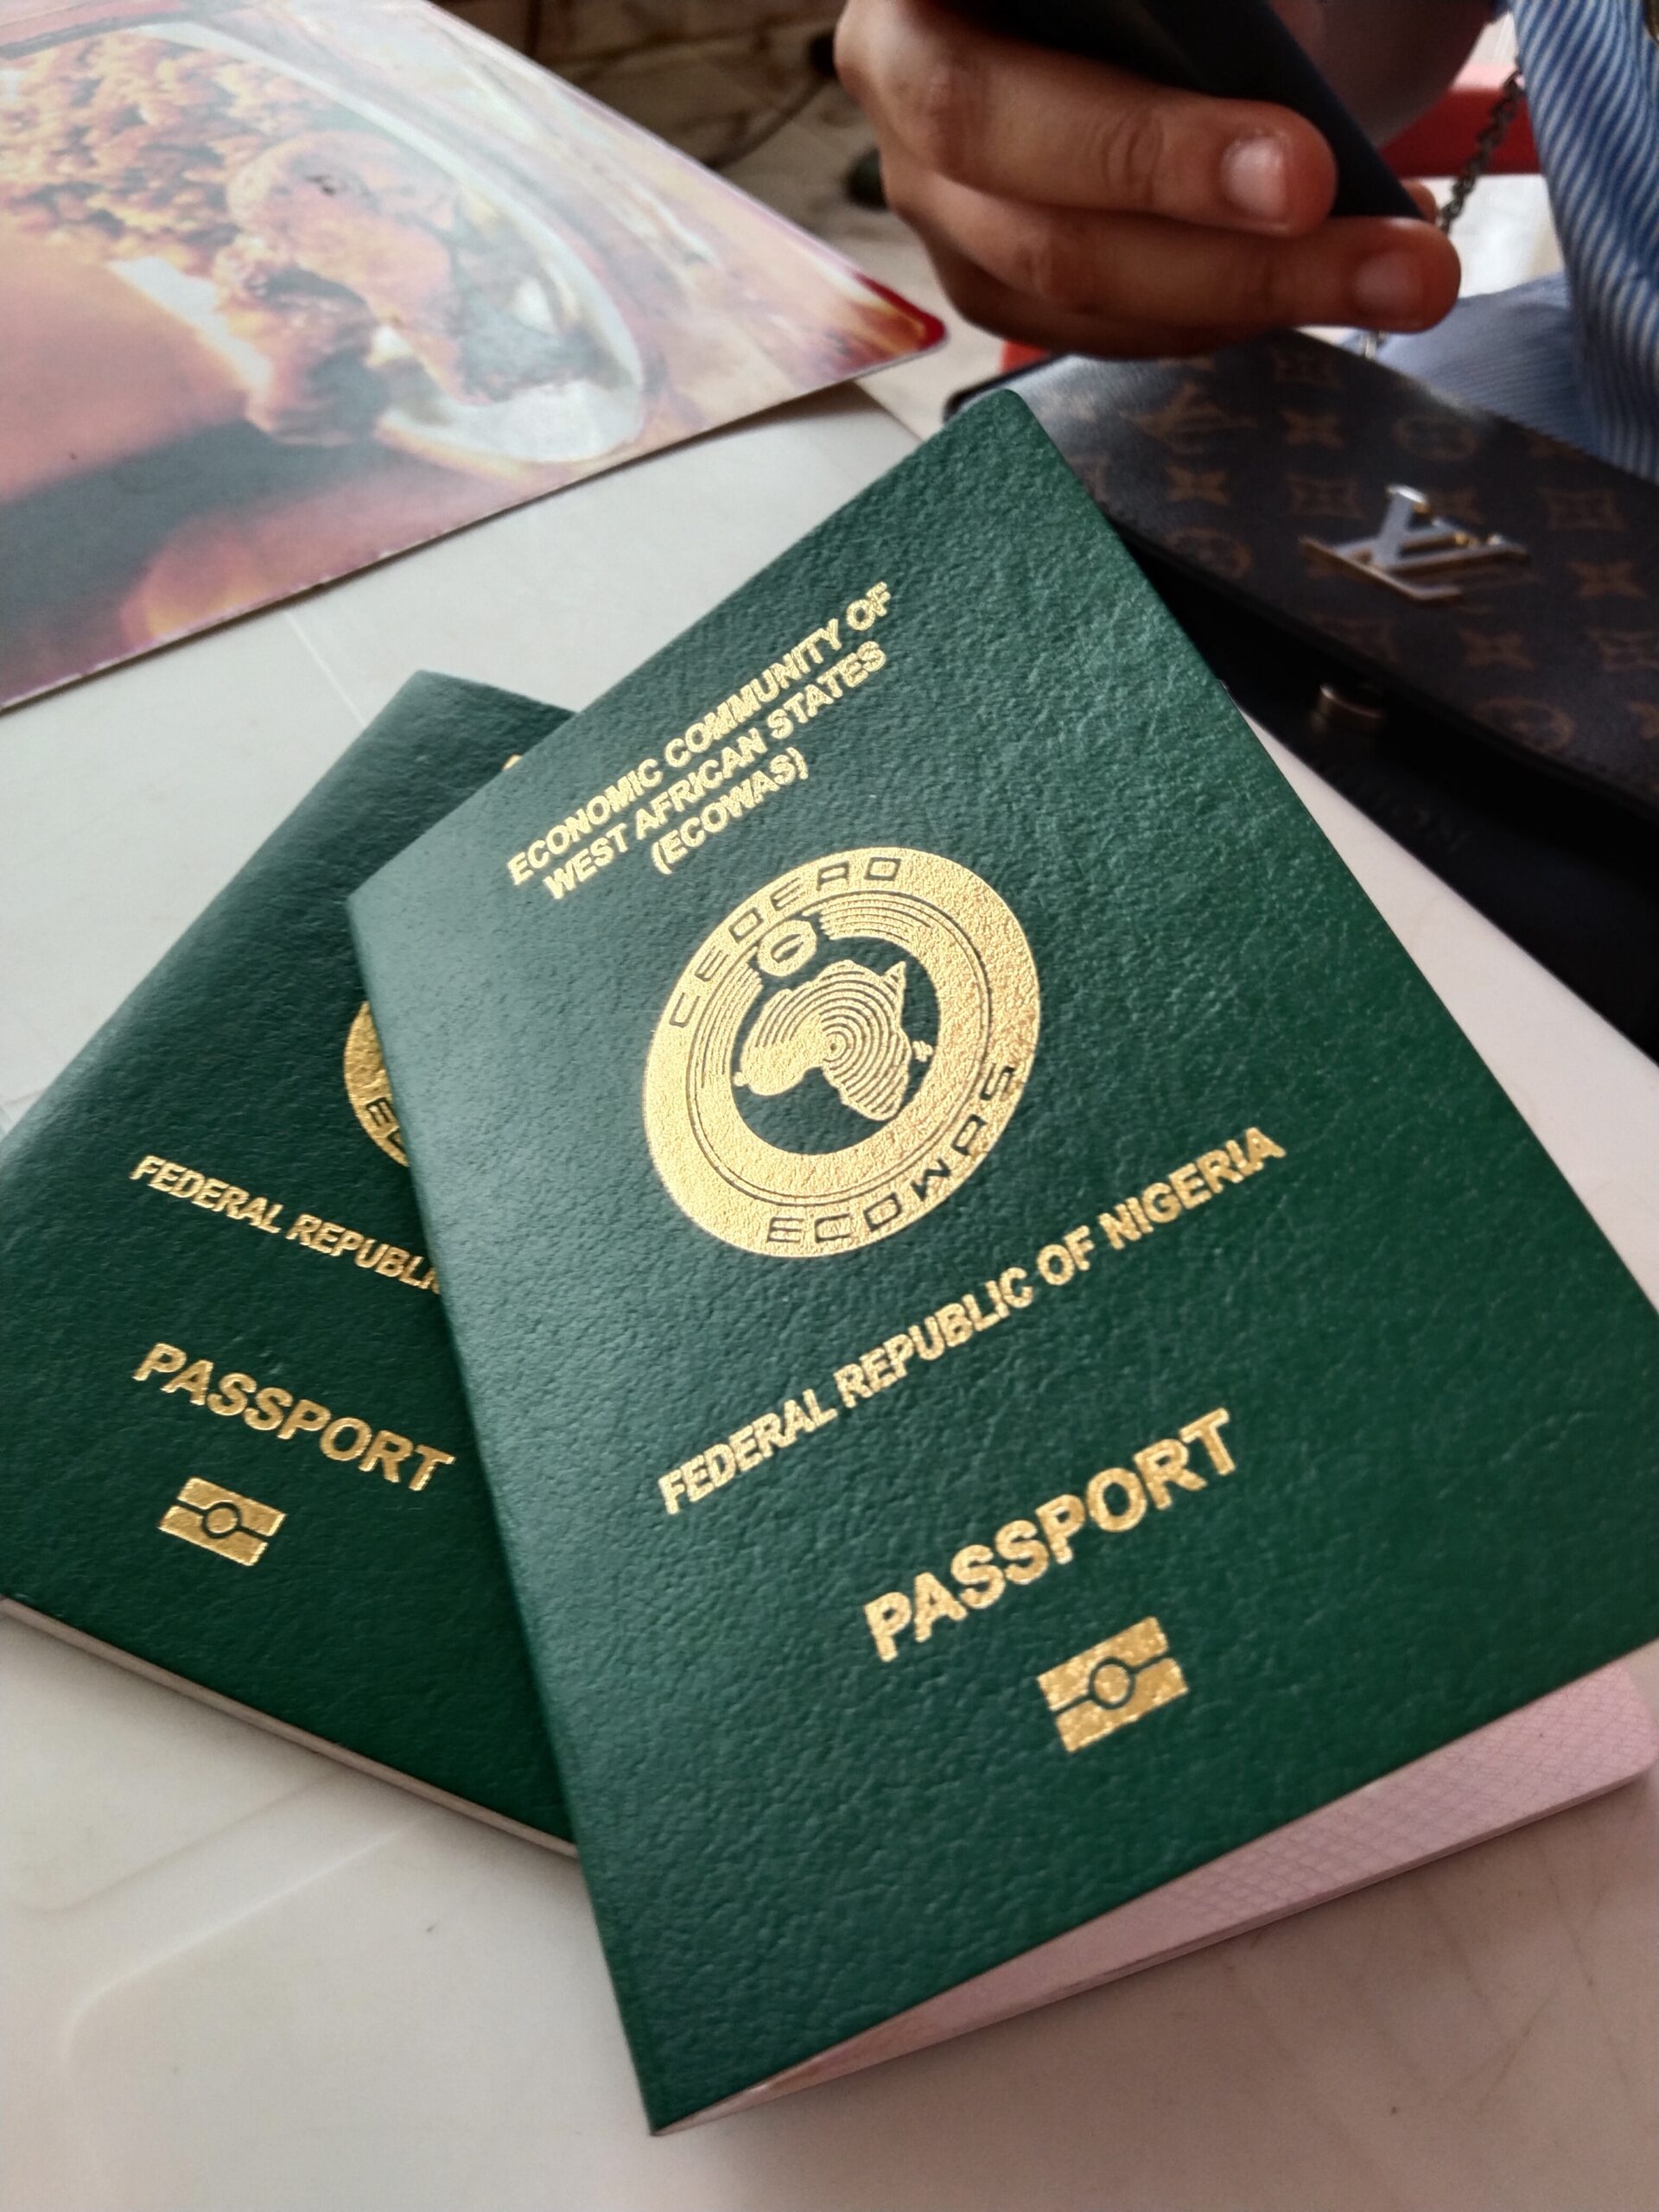 Nigerian Passport Image